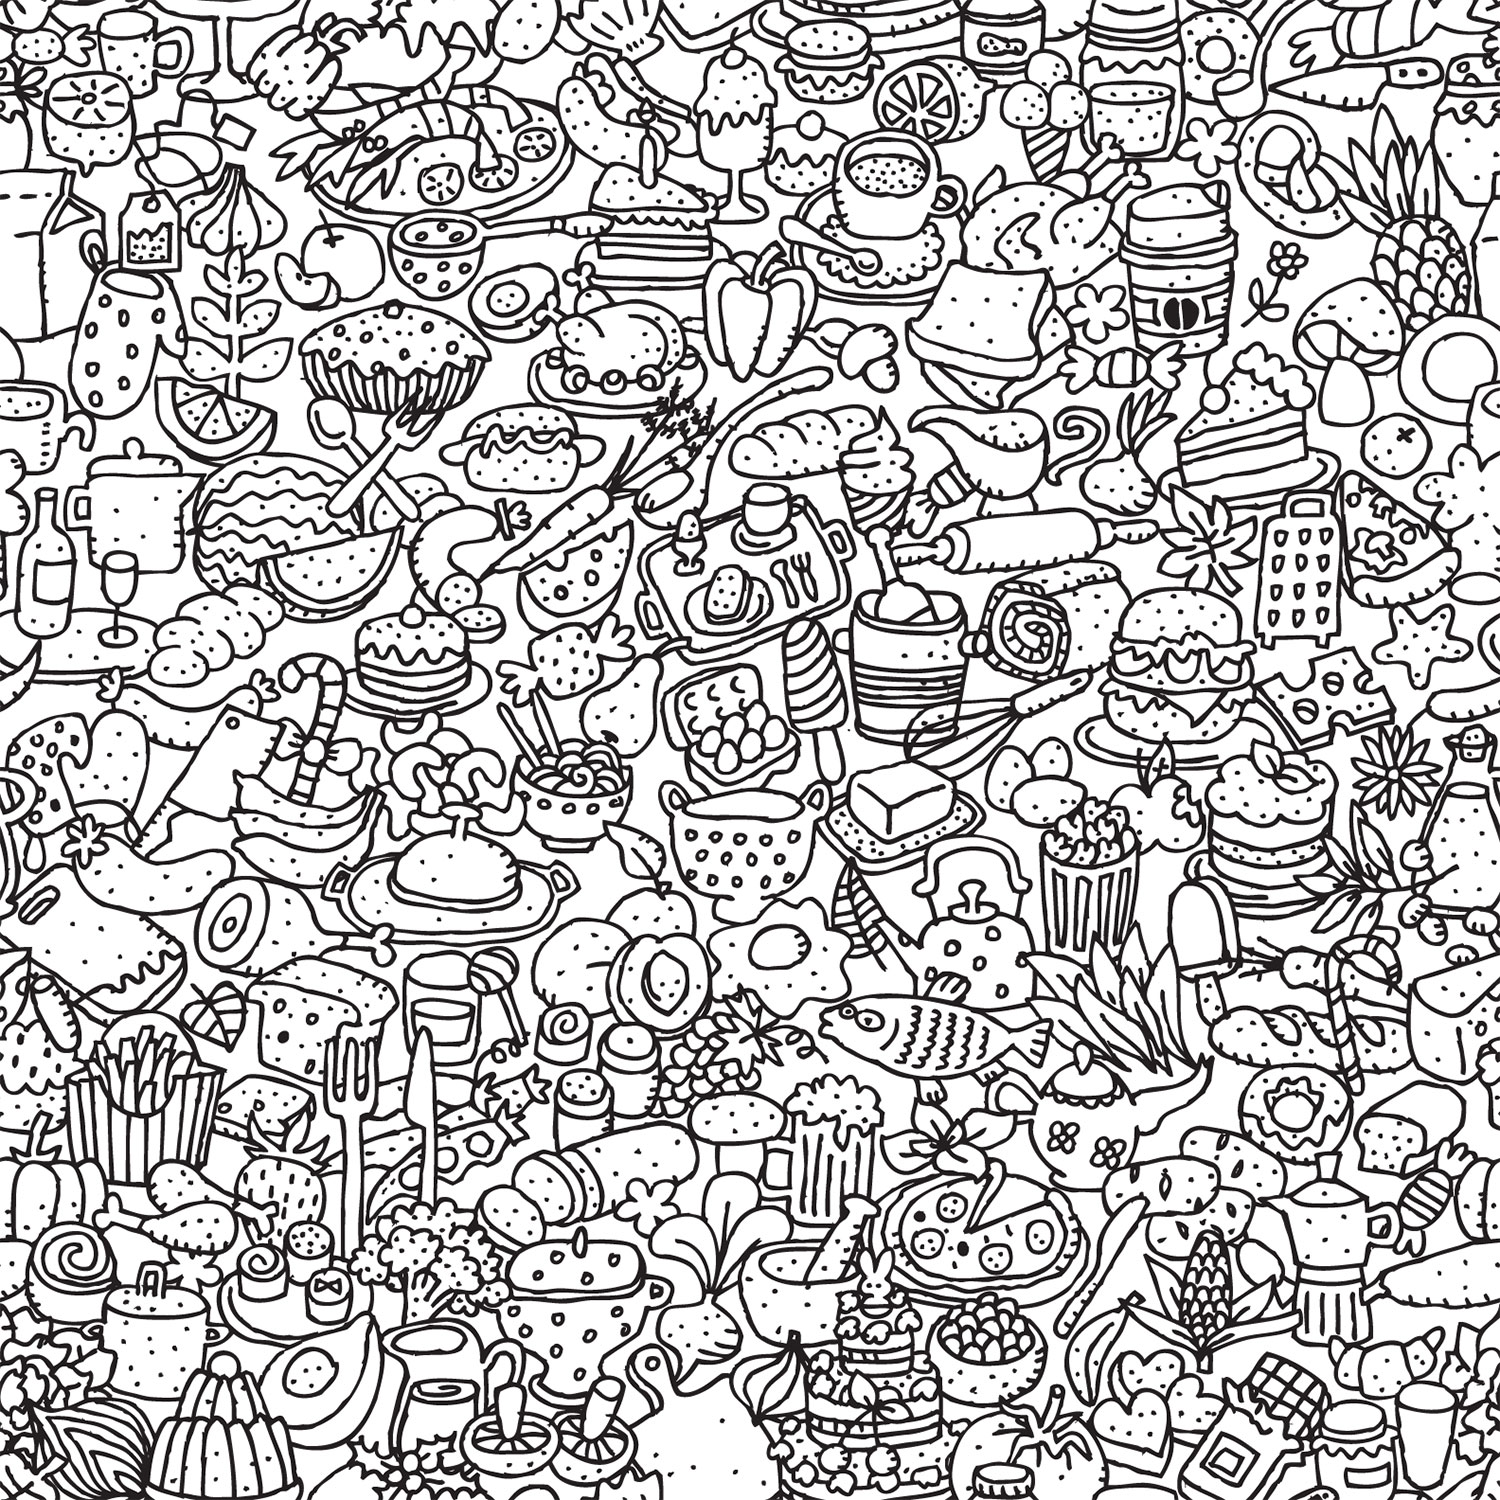 Food Doodle - Free Food Pattern Illustrations - 1500x1500 Wallpaper -  